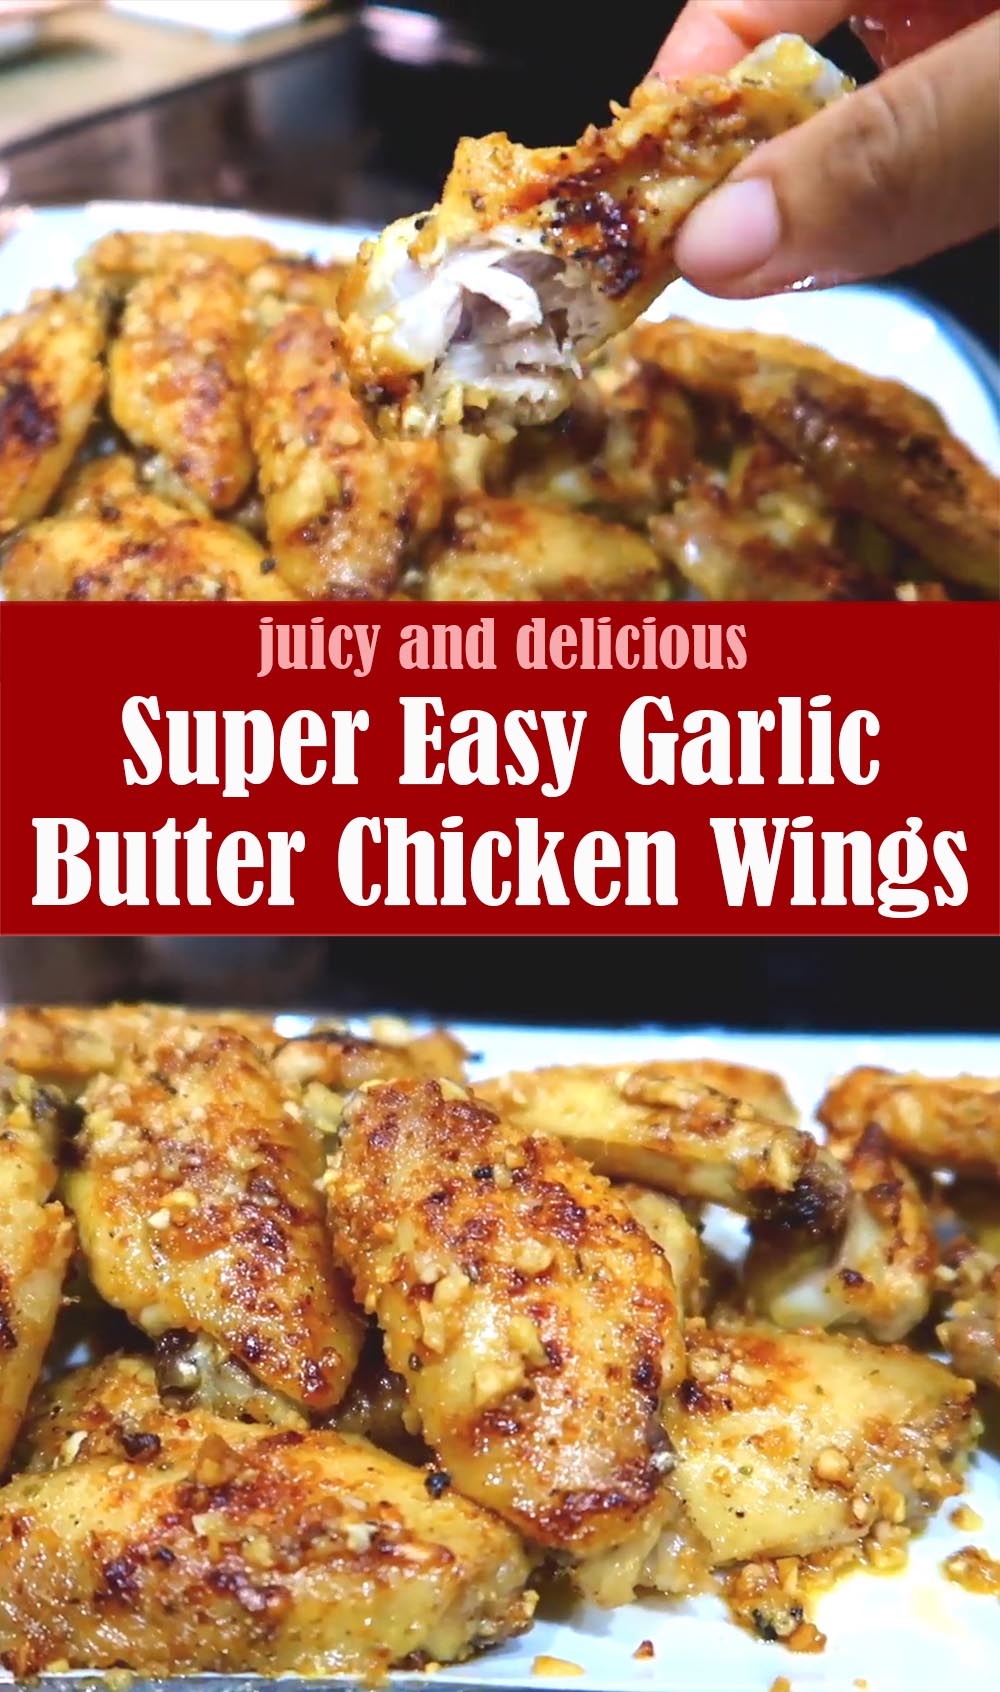 Super Easy Garlic Butter Chicken Wings Recipe